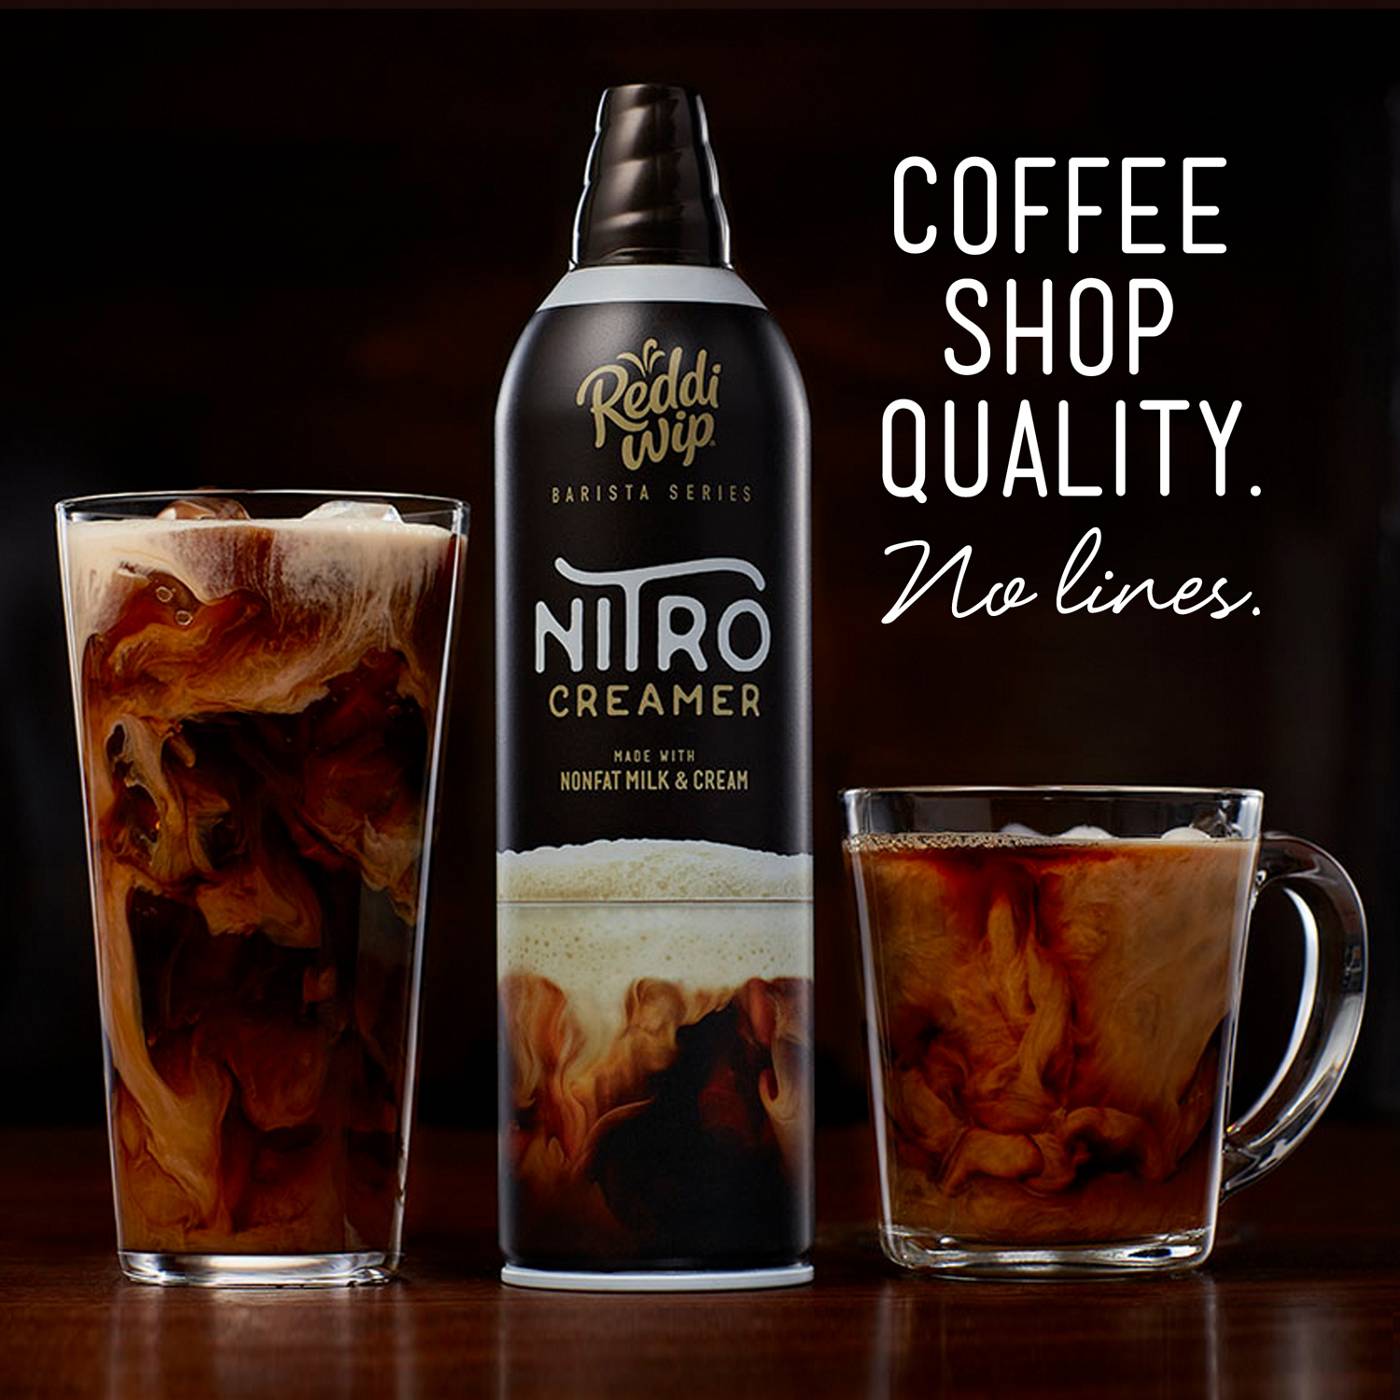 Reddi Wip Barista Series Nitro Coffee Creamer Topper Made with Nonfat Milk and Cream; image 3 of 7